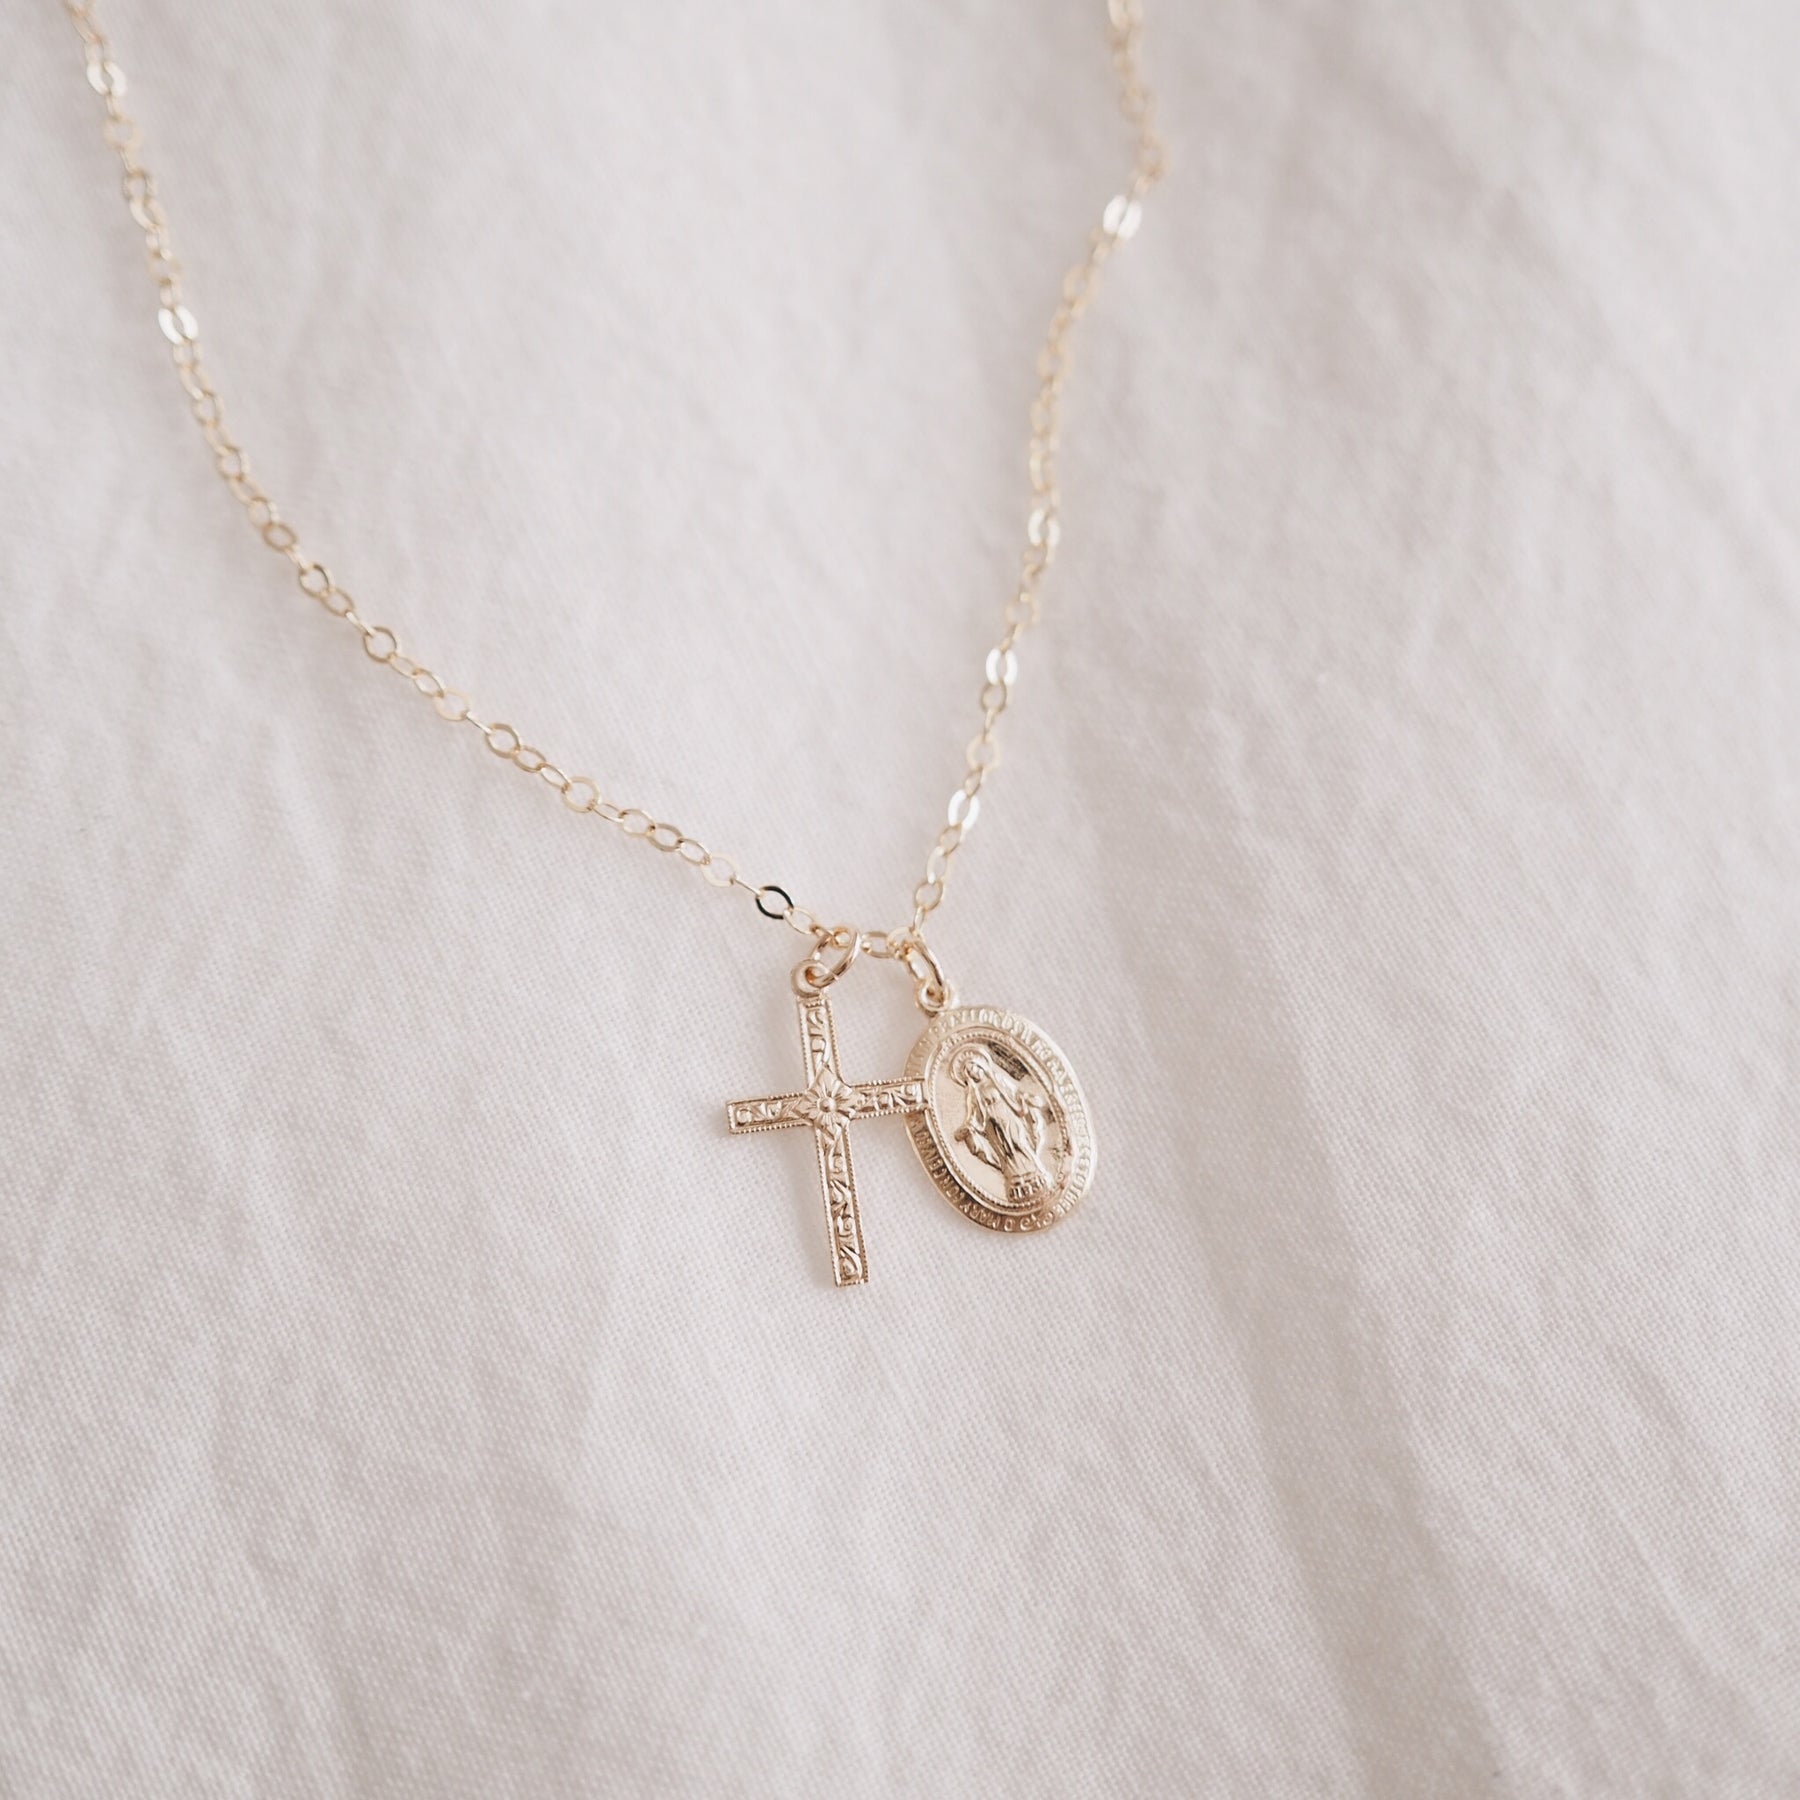 Tiny Miraculous Medal Necklace - Catholic Inspired